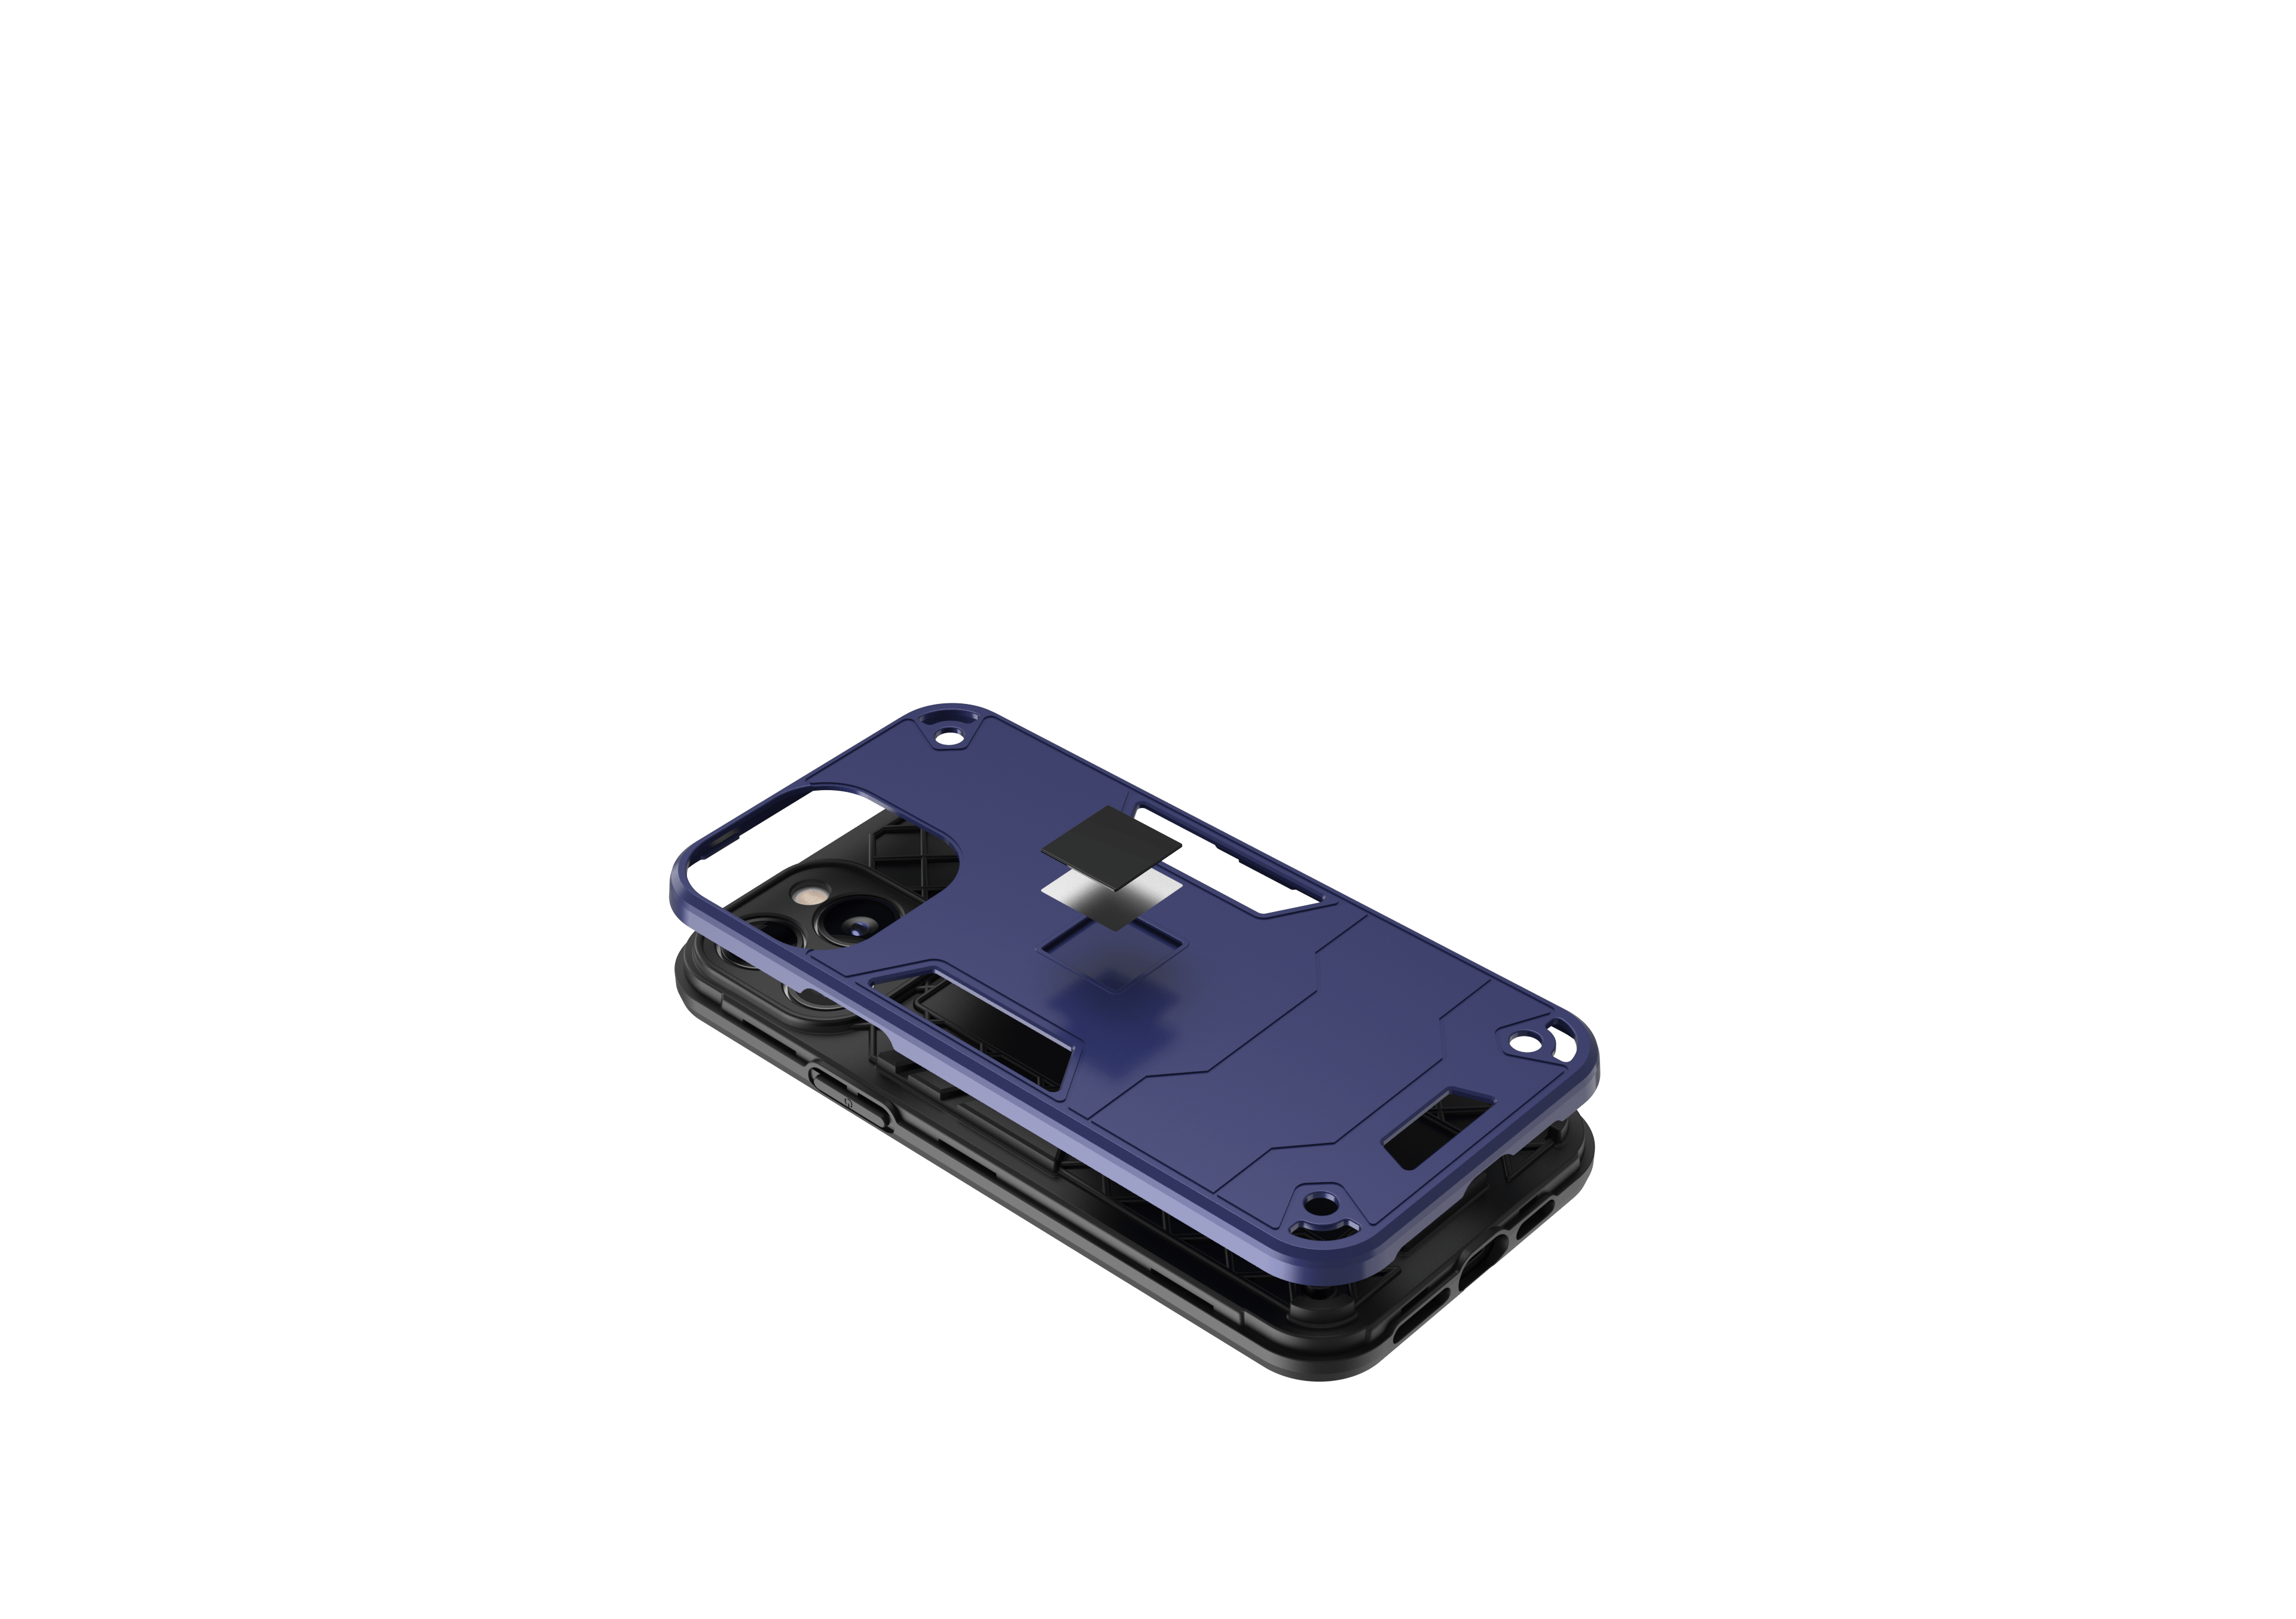 Pantserhoes voor iphone met ingebouwde magneet